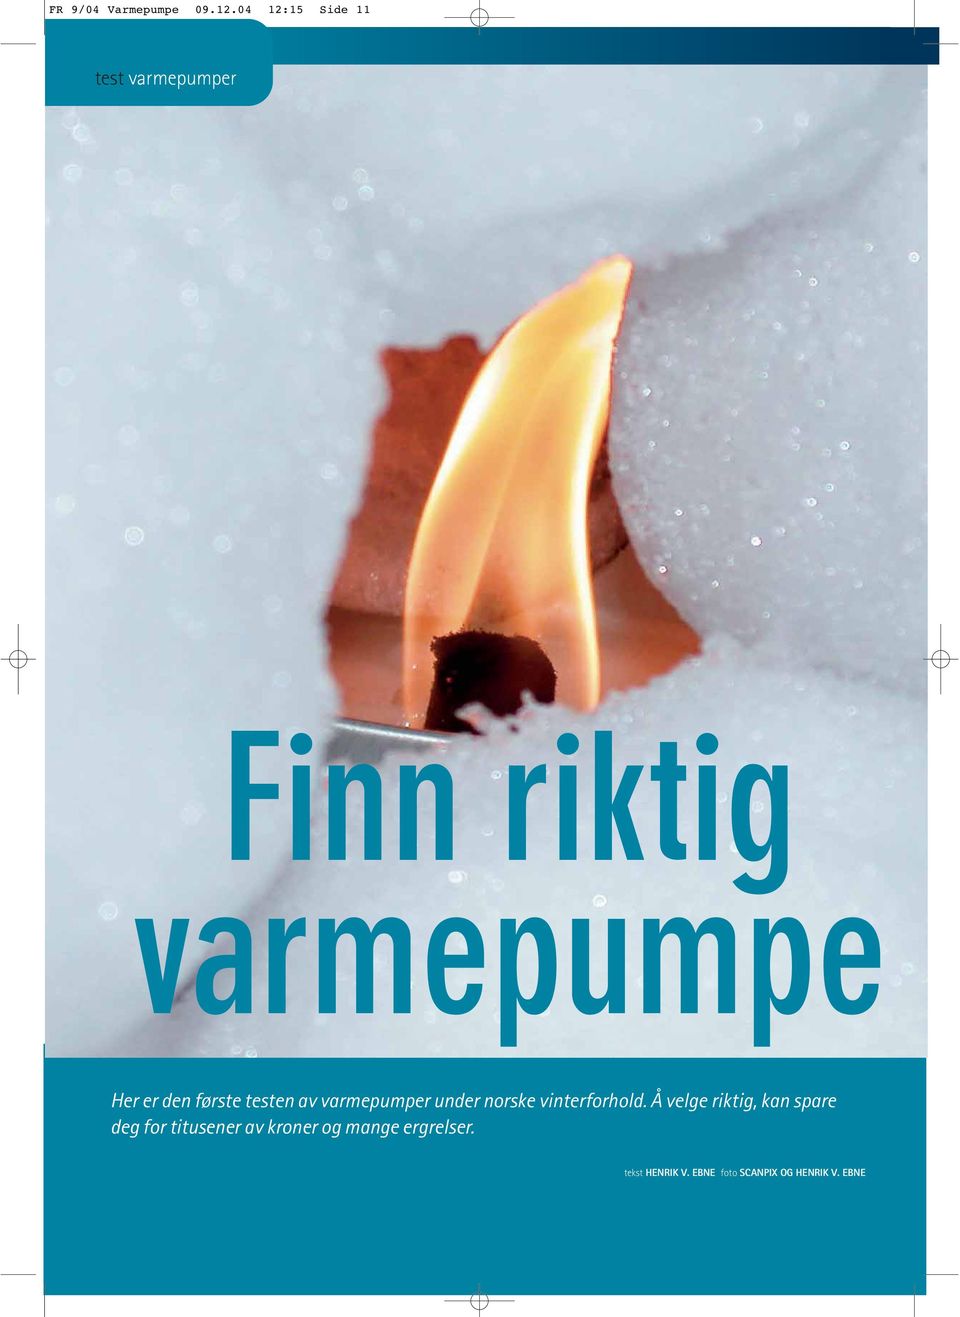 av varmepumper under norske vinterforhold.